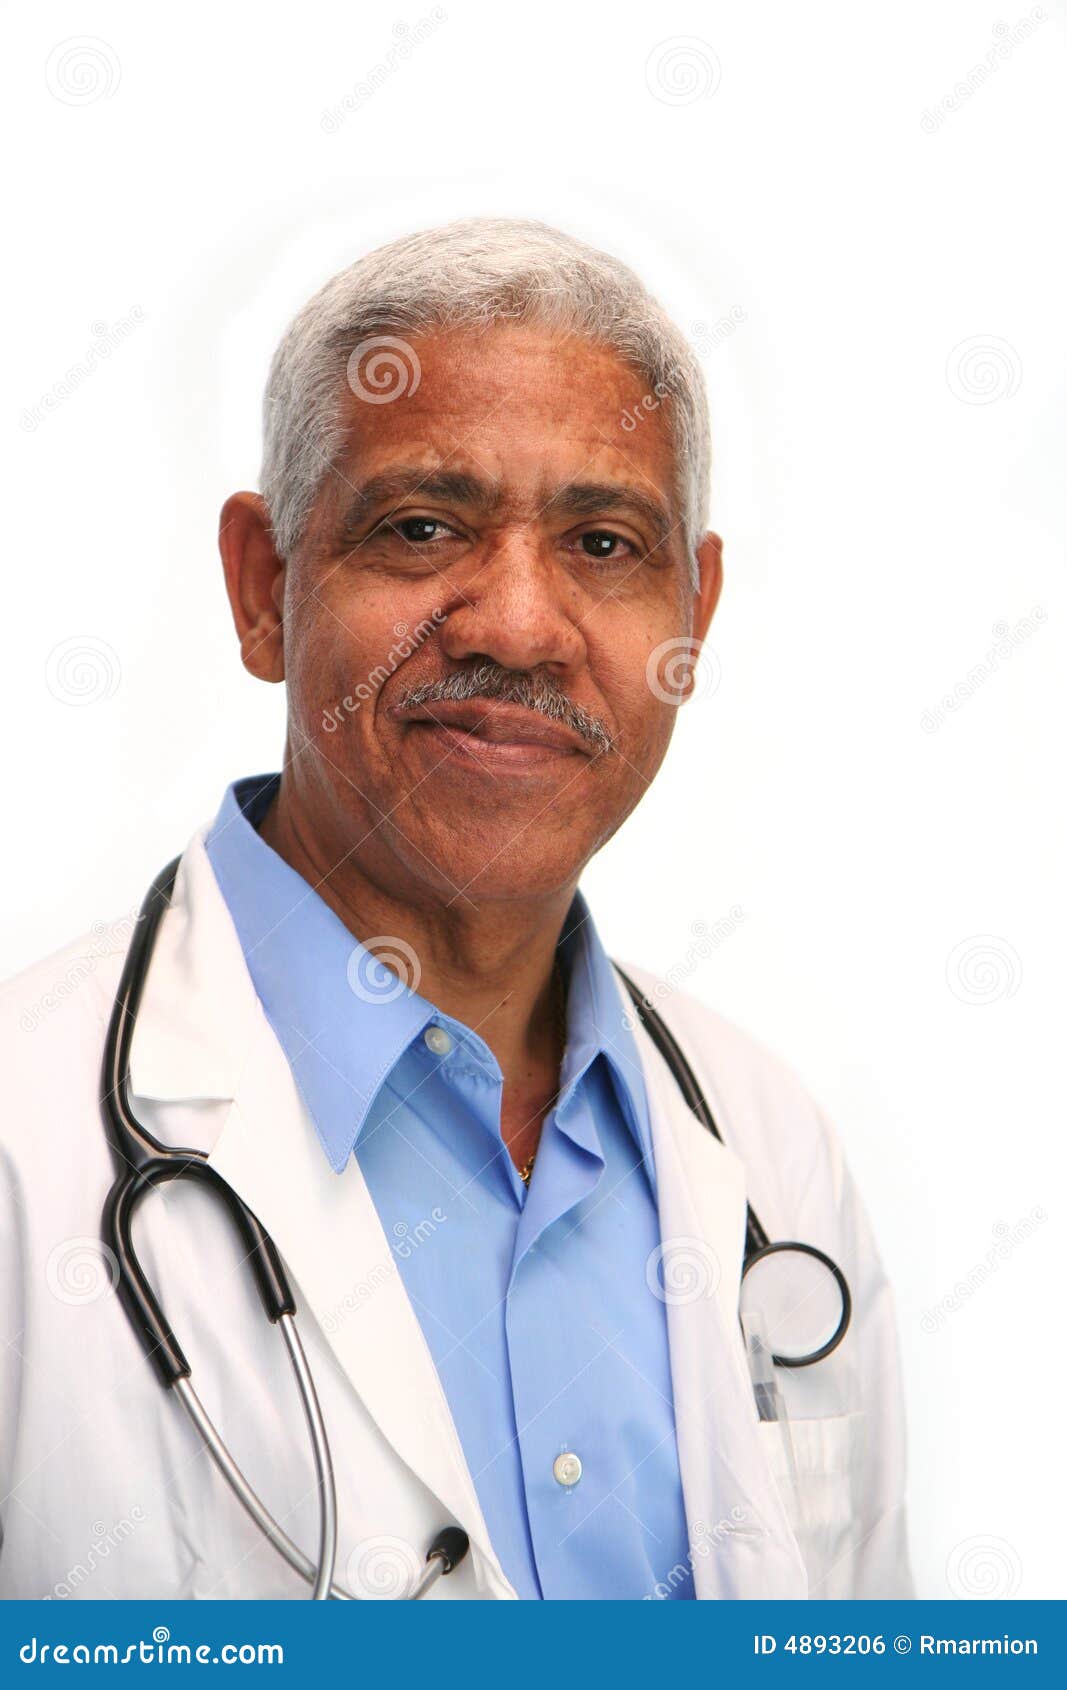 minority doctor